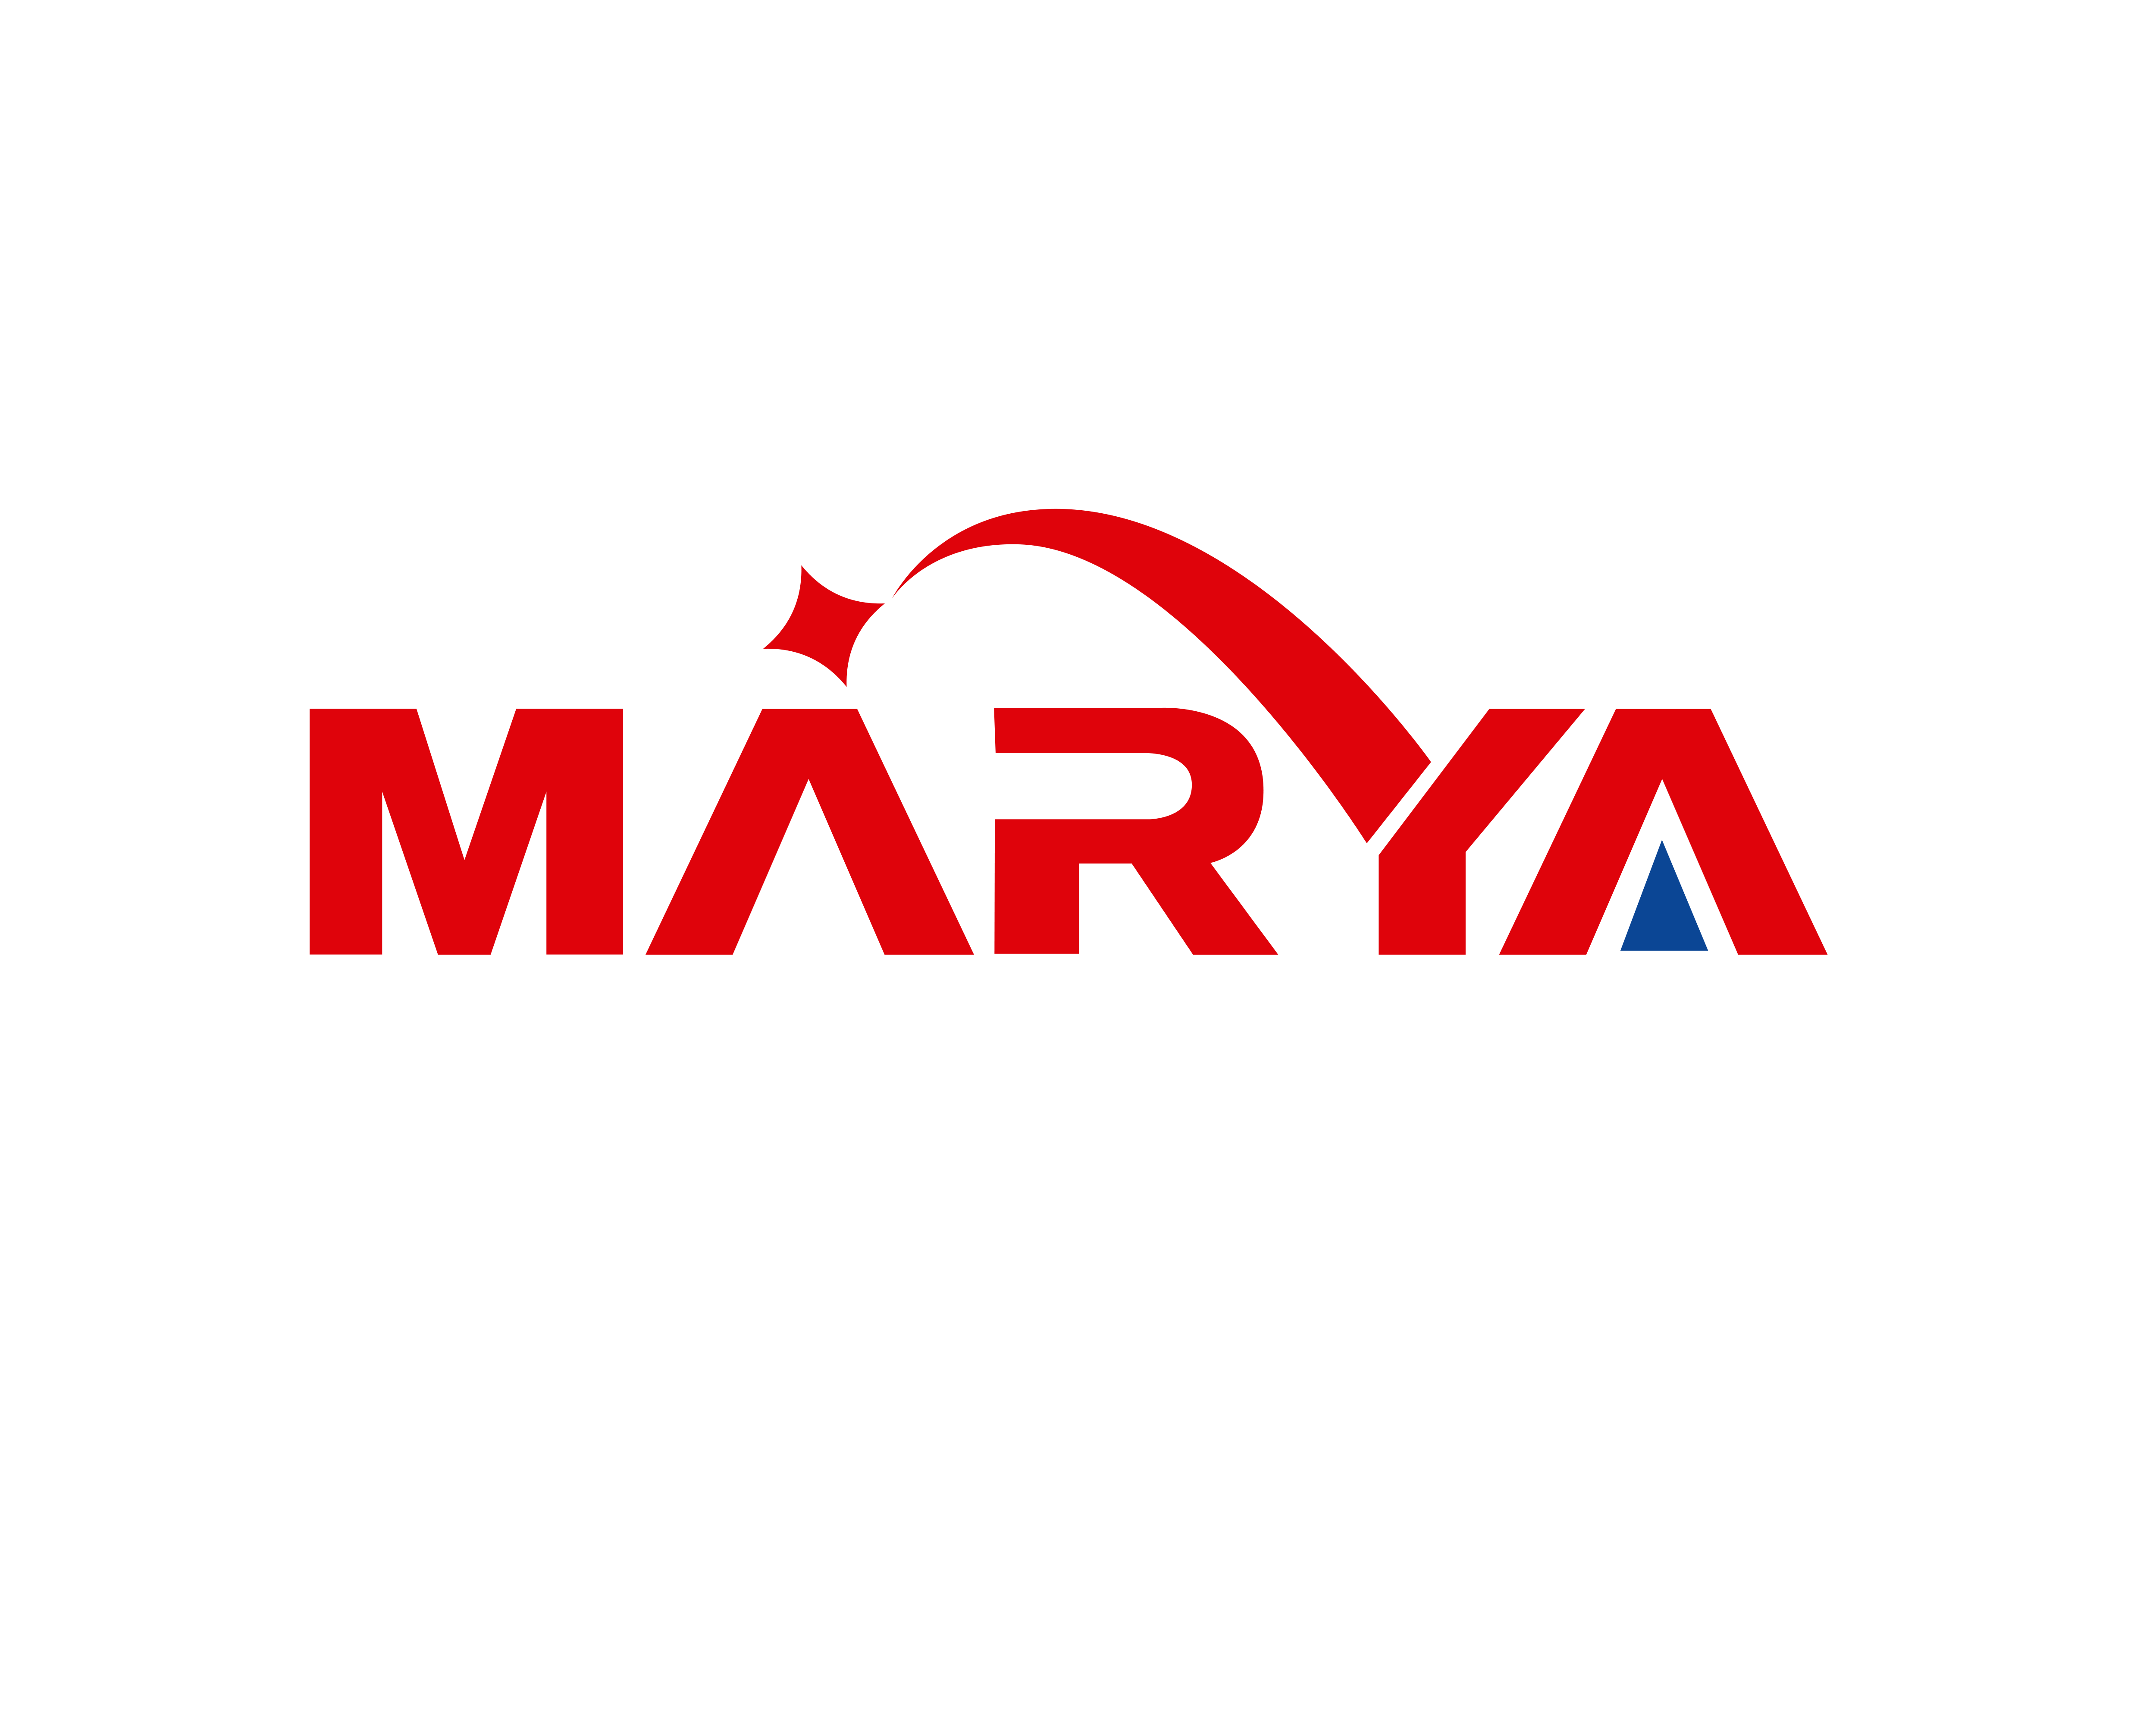 Shanghai Marya Pharmaceutical Engineering&Project Co.,Ltd logo